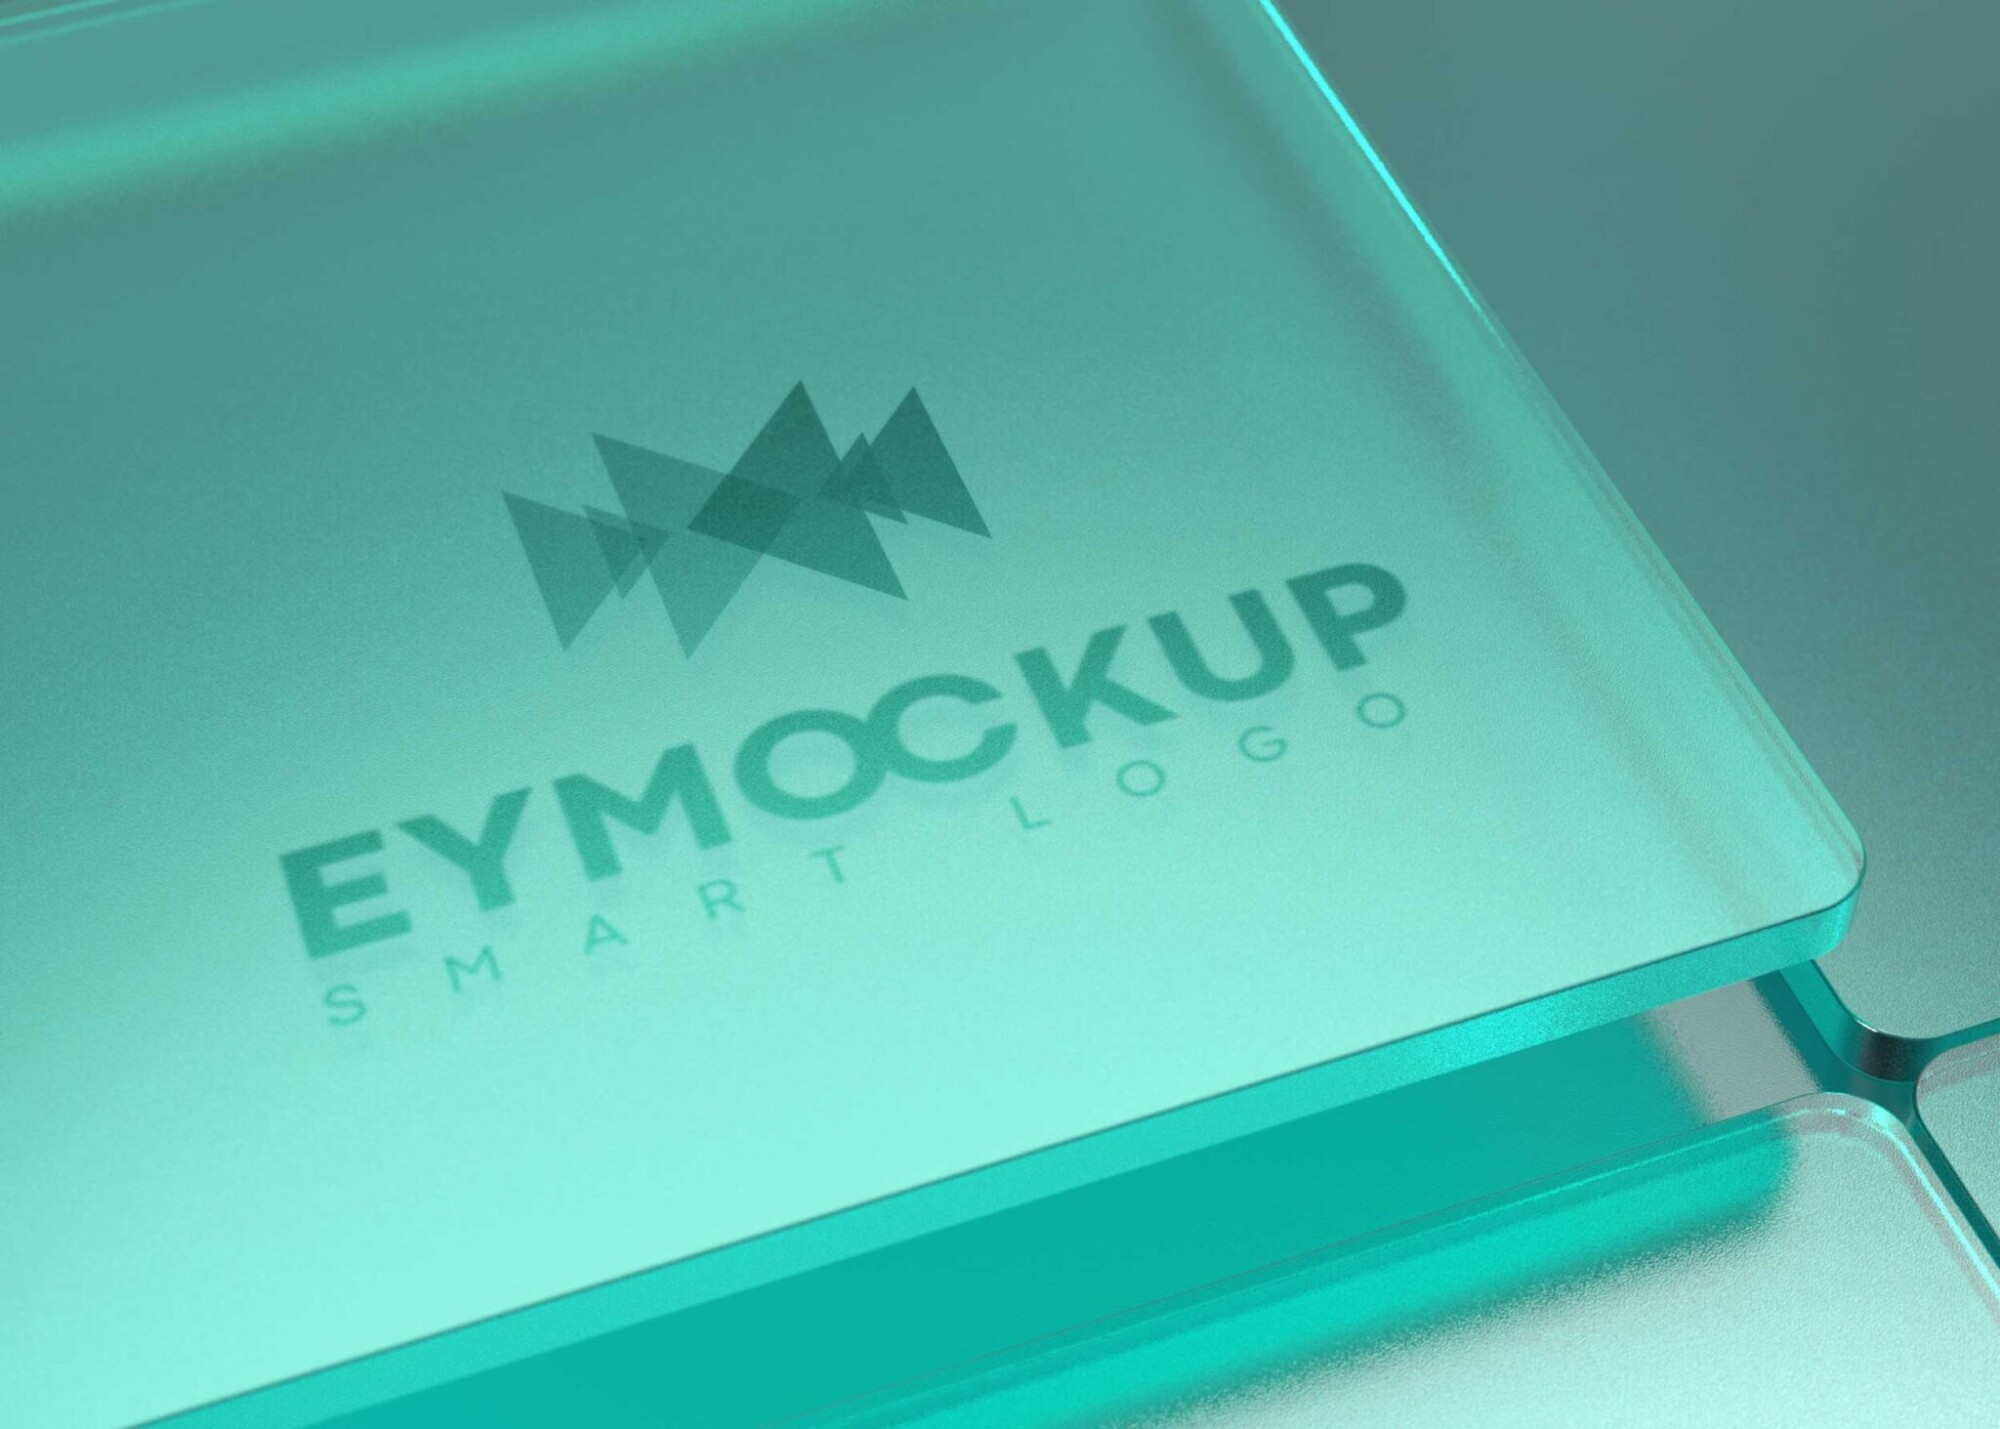 Green Glass Logo Mockup